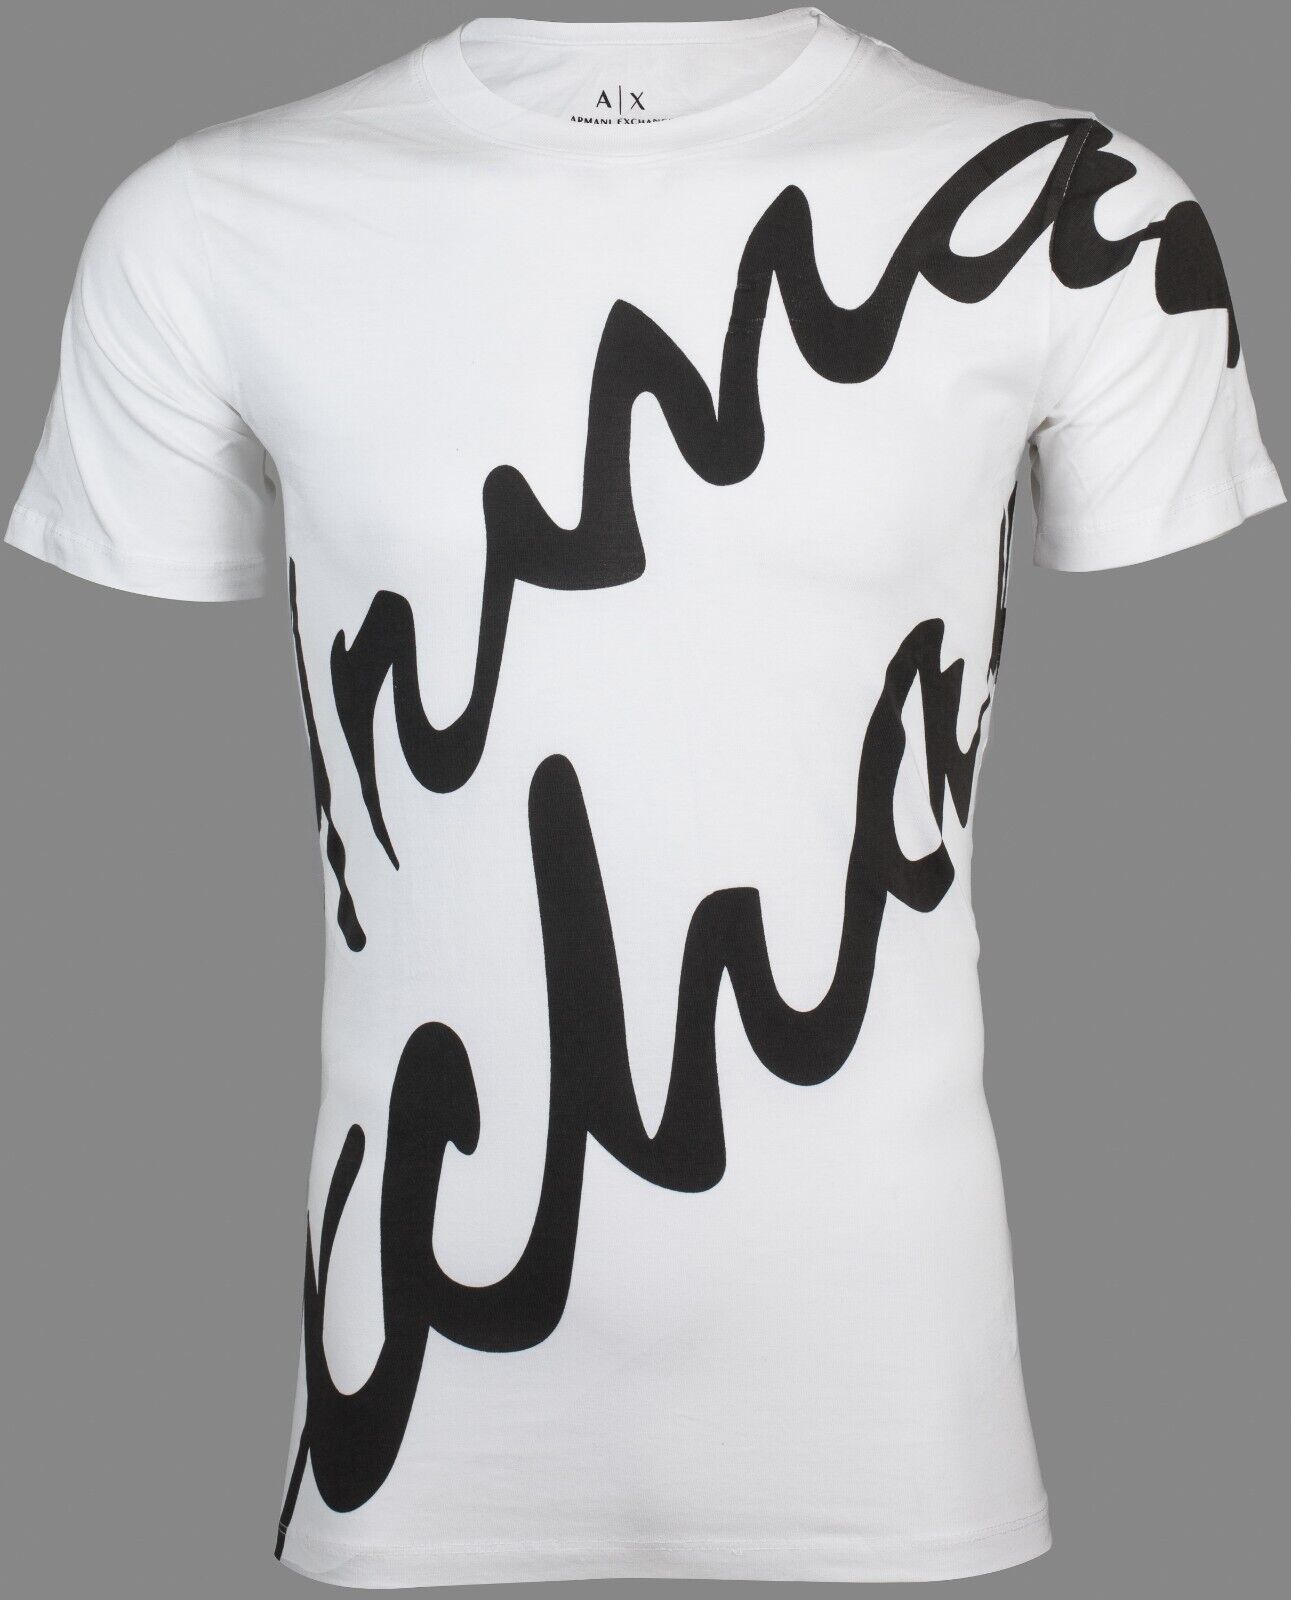 ARMANI EXCHANGE White SCRIPT Short Sleeve Slim Fit Designer Graphic T-shirt NWT